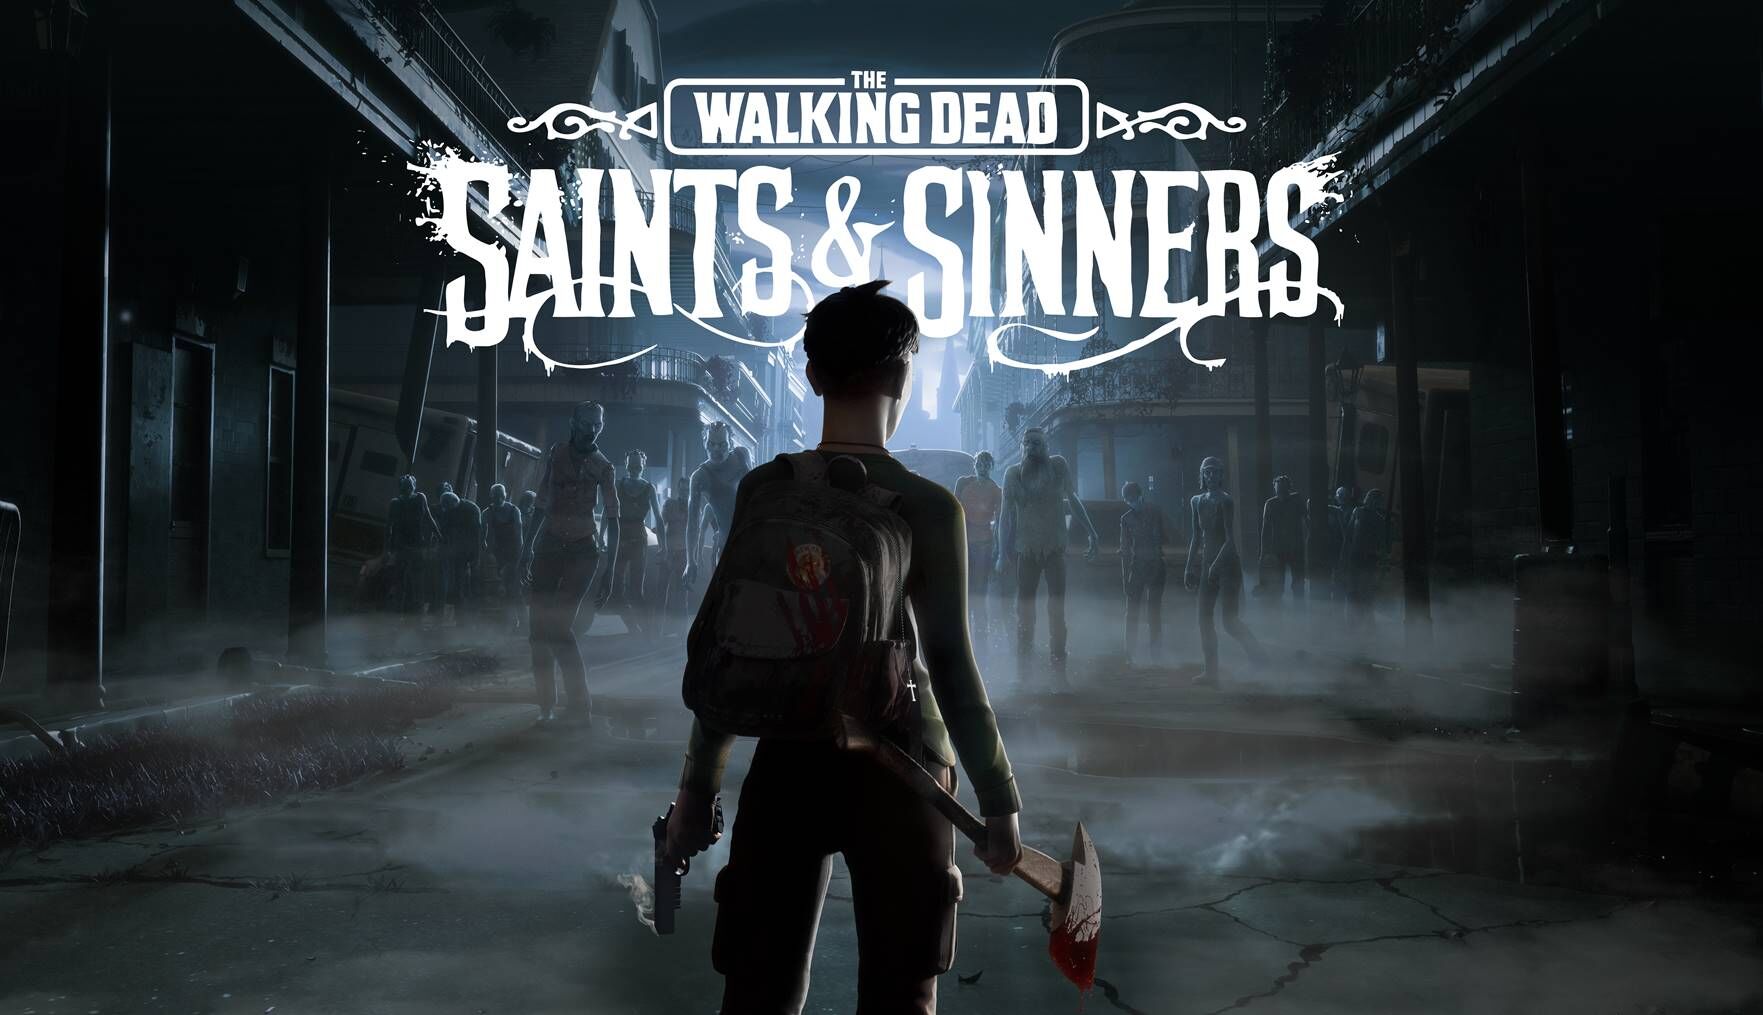 The Walking Dead Saint & Sinners im Test - HitPointGaming